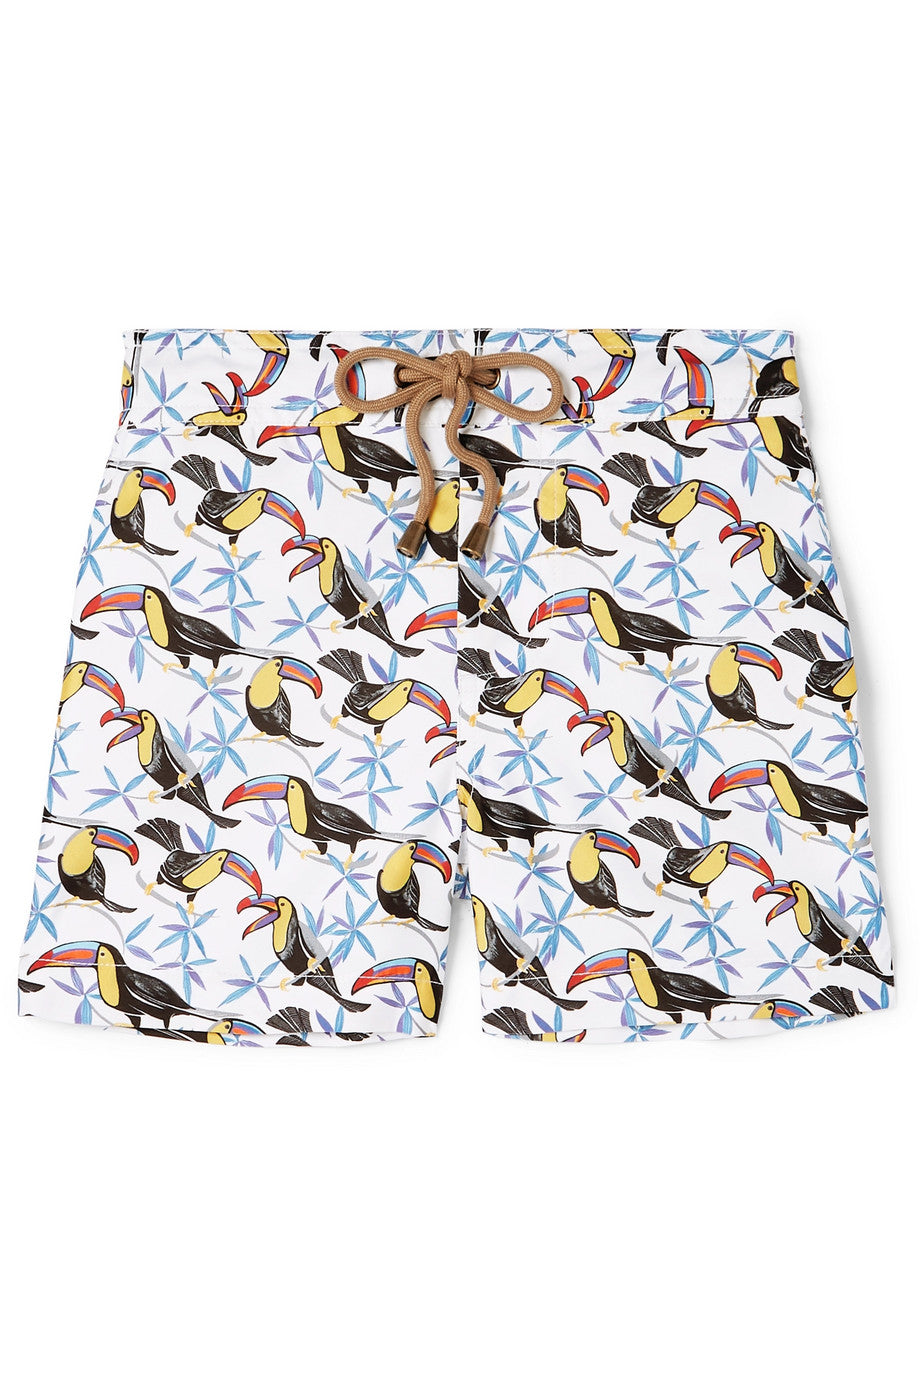 Zeus - Toucan printed swim shorts - Thorsun